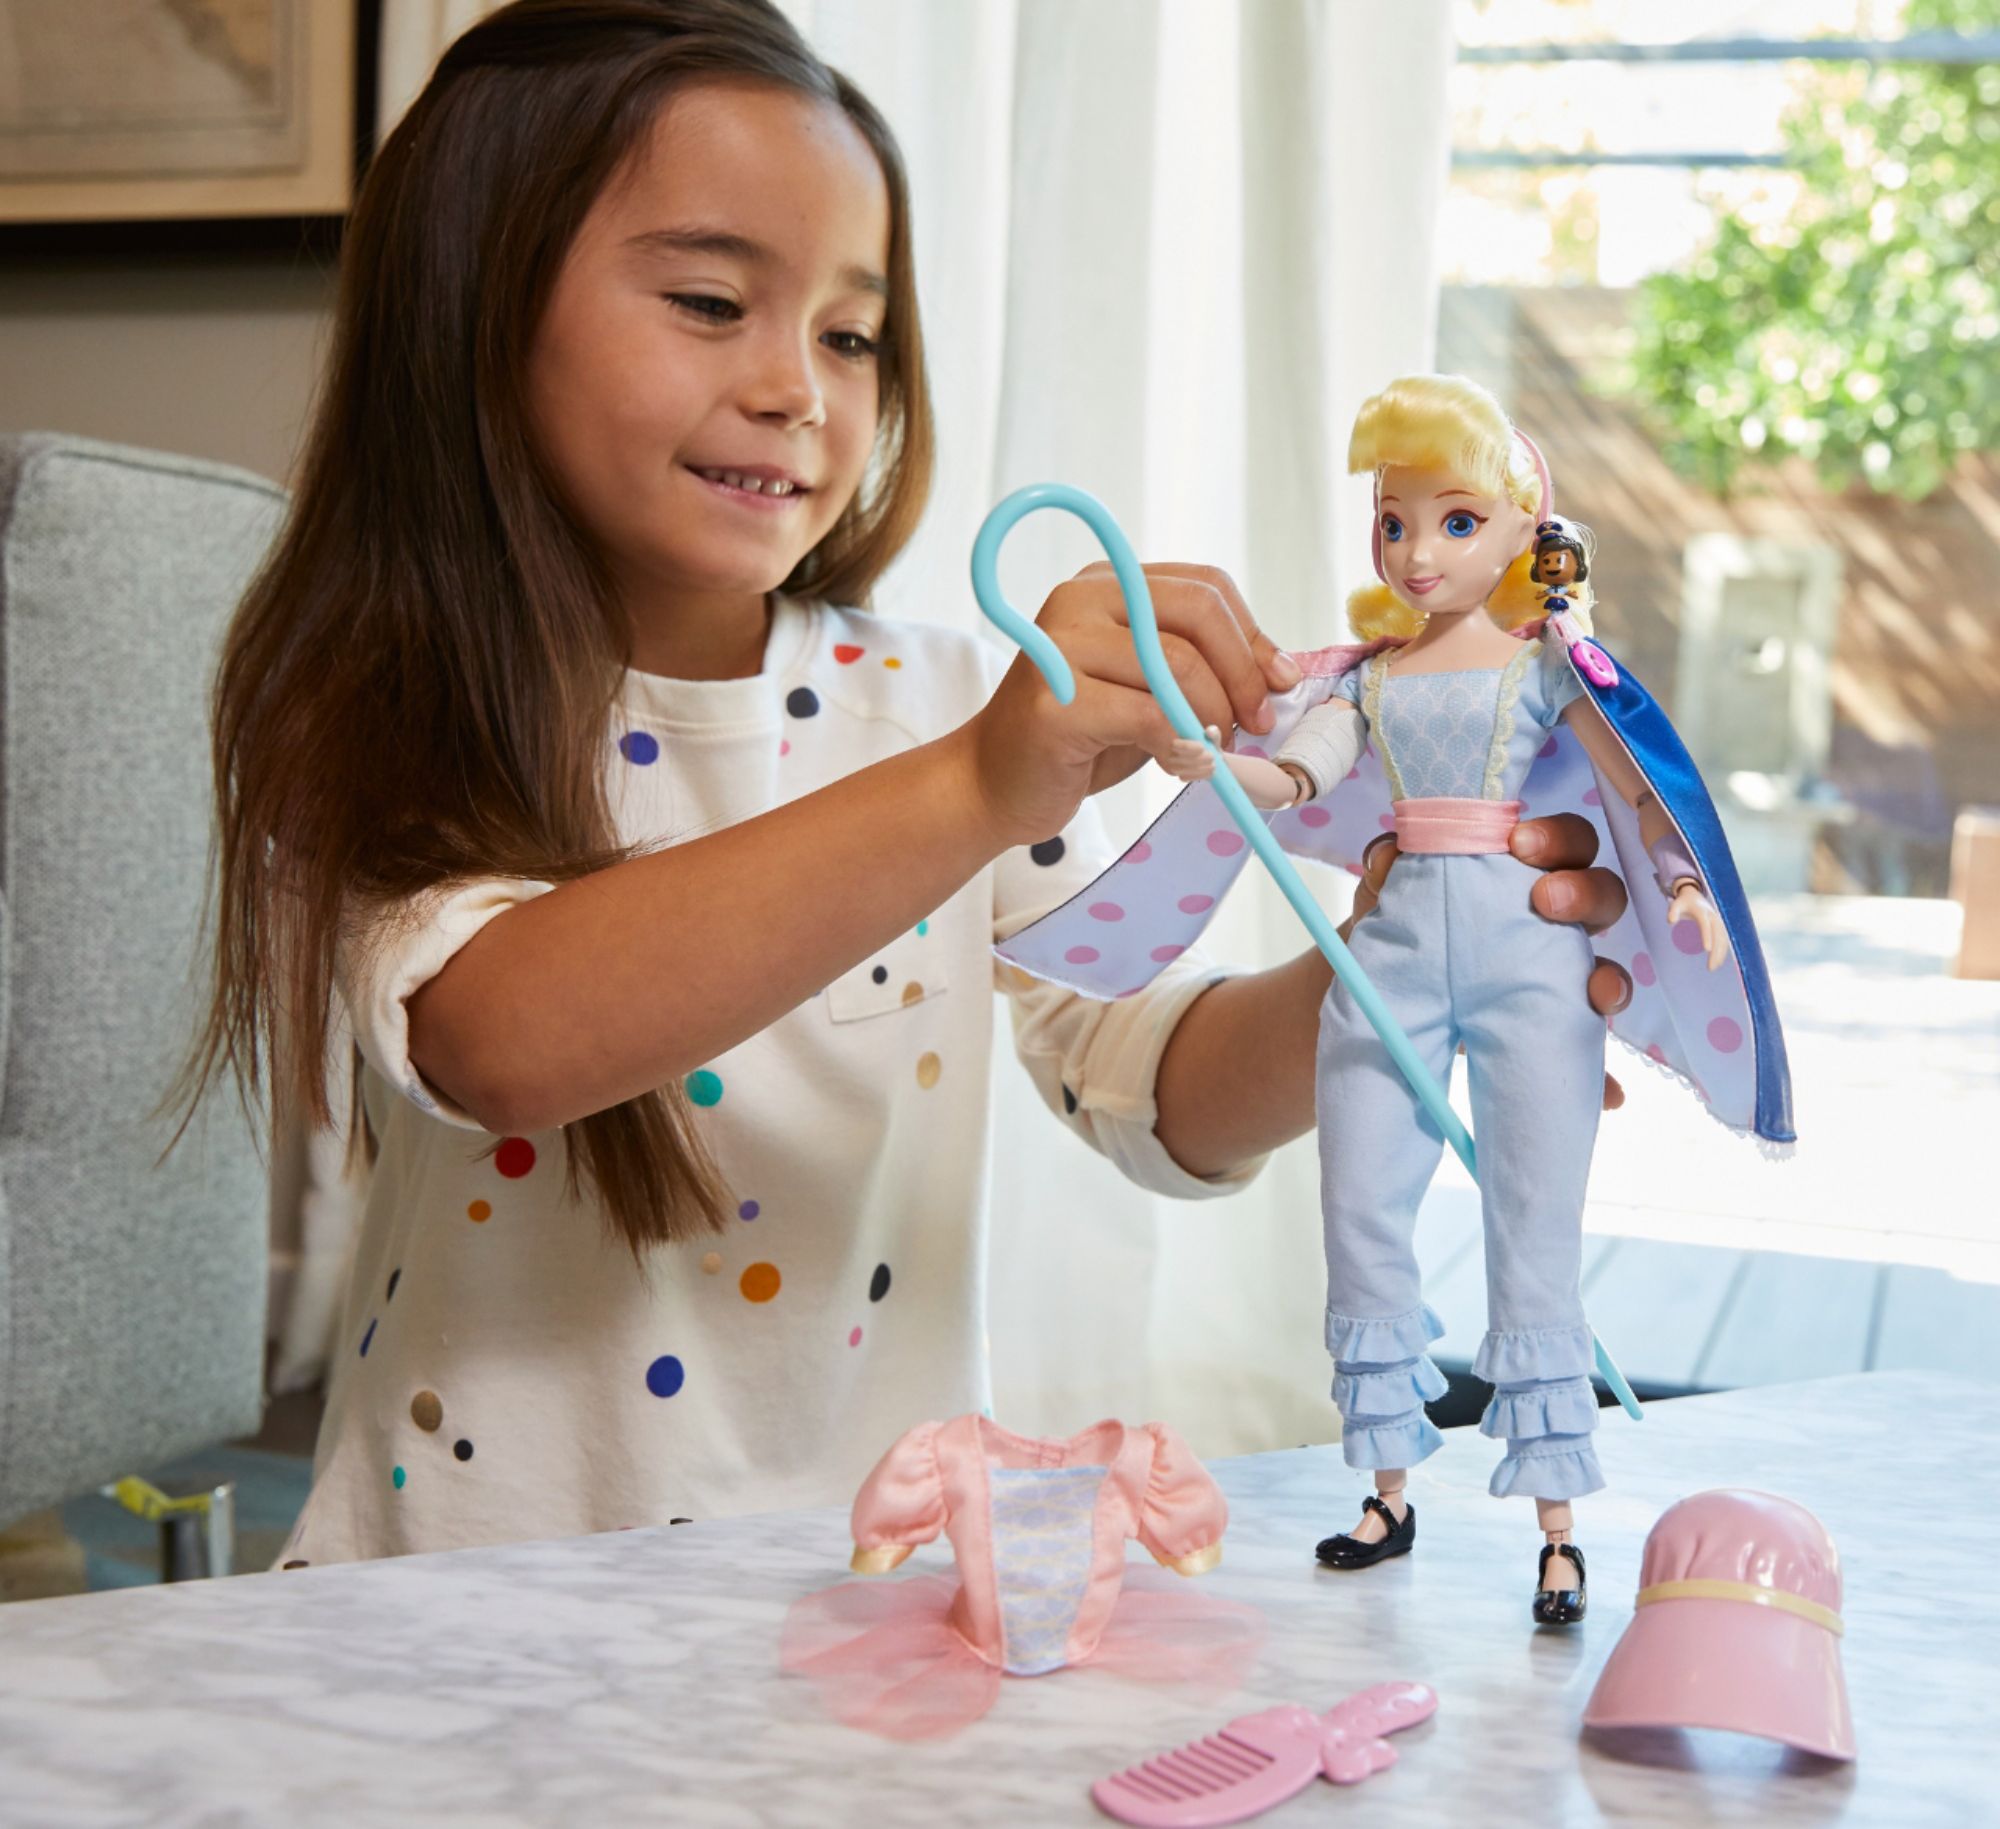 Disney GDR18 Pixar Toy Story 4 Epic Moves Bo PeeP Doll for sale online